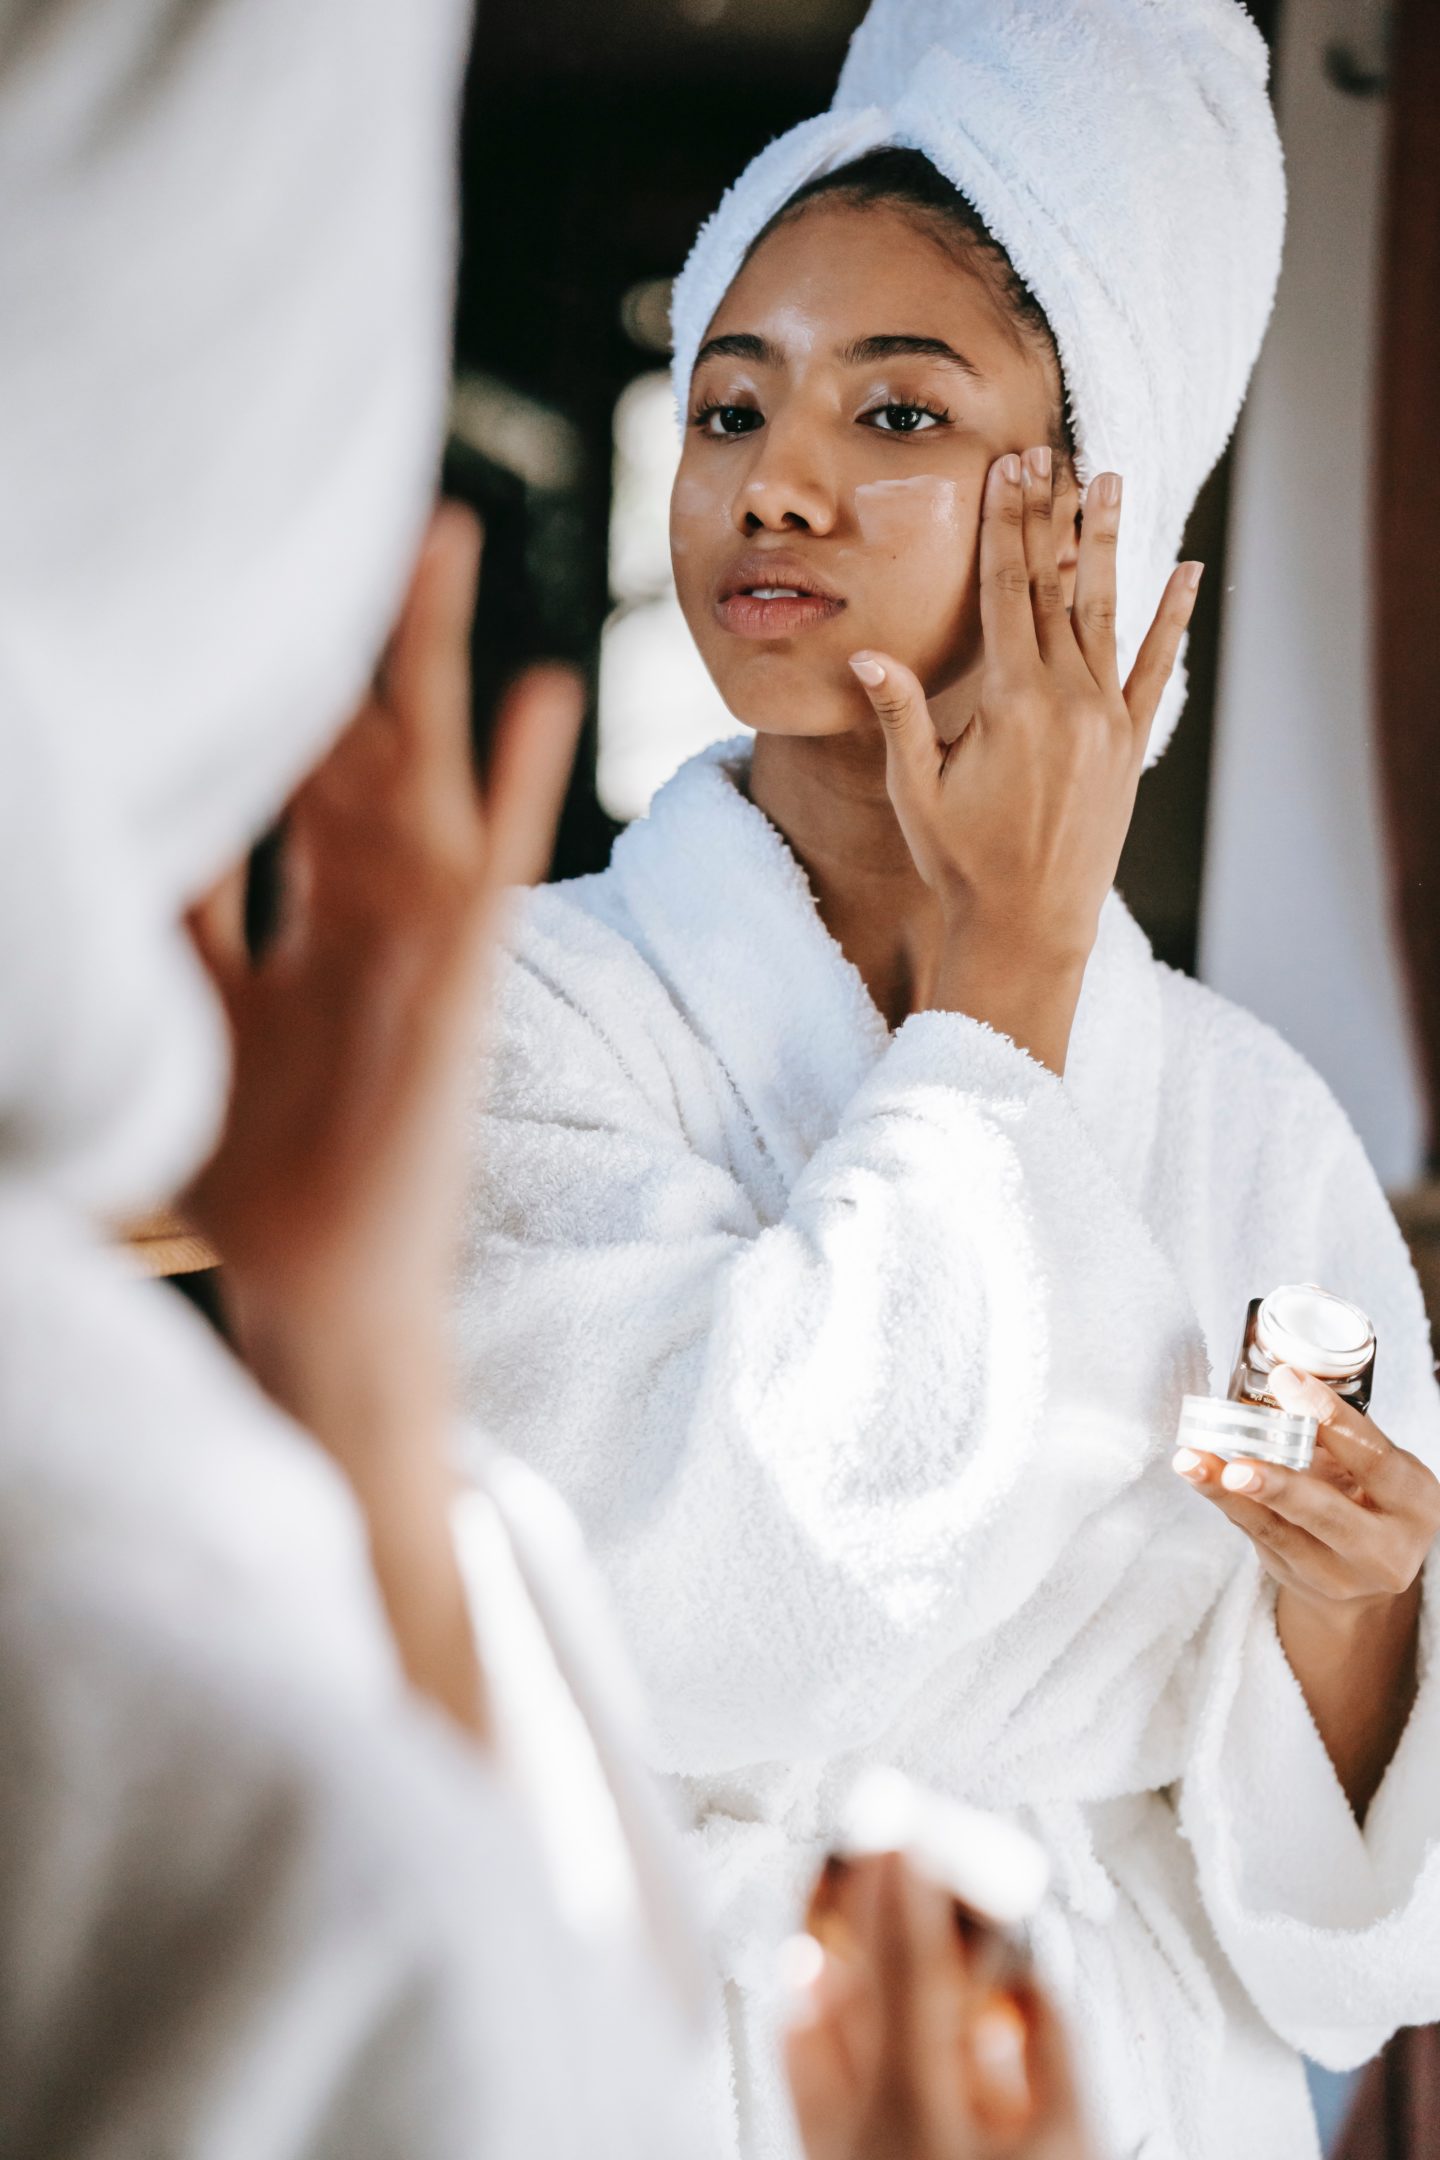 Wedding Skincare; 5 Tips to Prepare Your Skin FoWedding Skincare; 5 Tips to Prepare Your Skin For Your Wedding Dayr Your Wedding Day